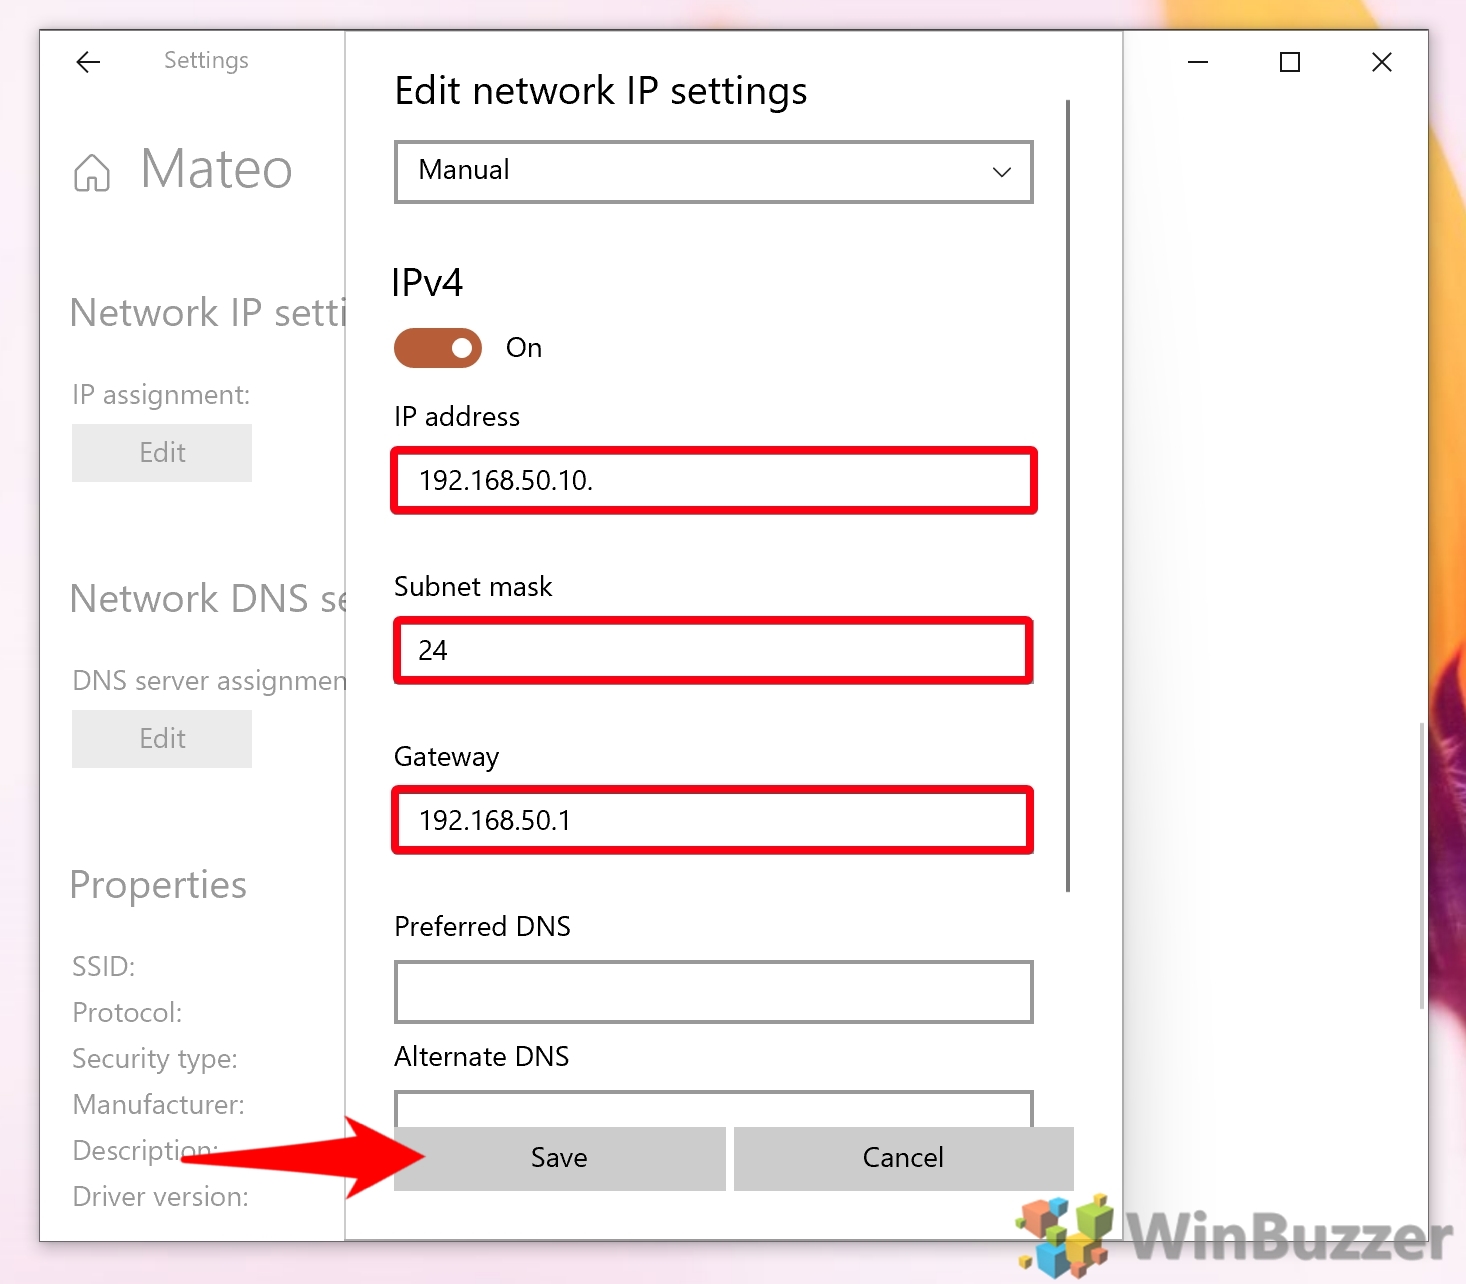 Windows 10 - Settings - Network & Internet - Wifi - Edit IP Assignment - Manual - Fill it